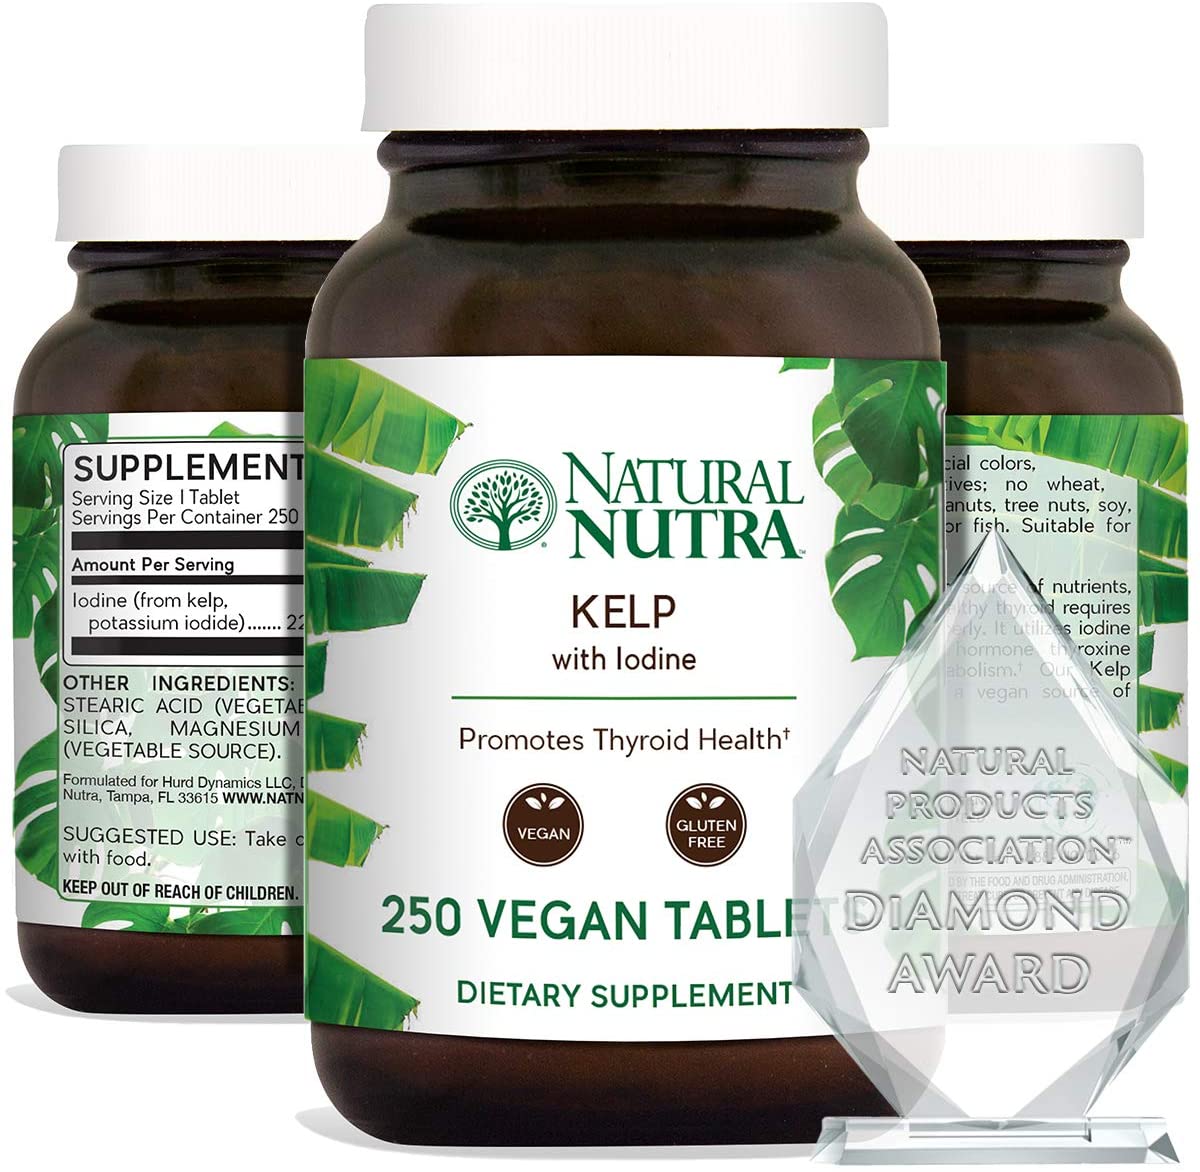 2. Natural Nutra Kelp Iodine Supplement